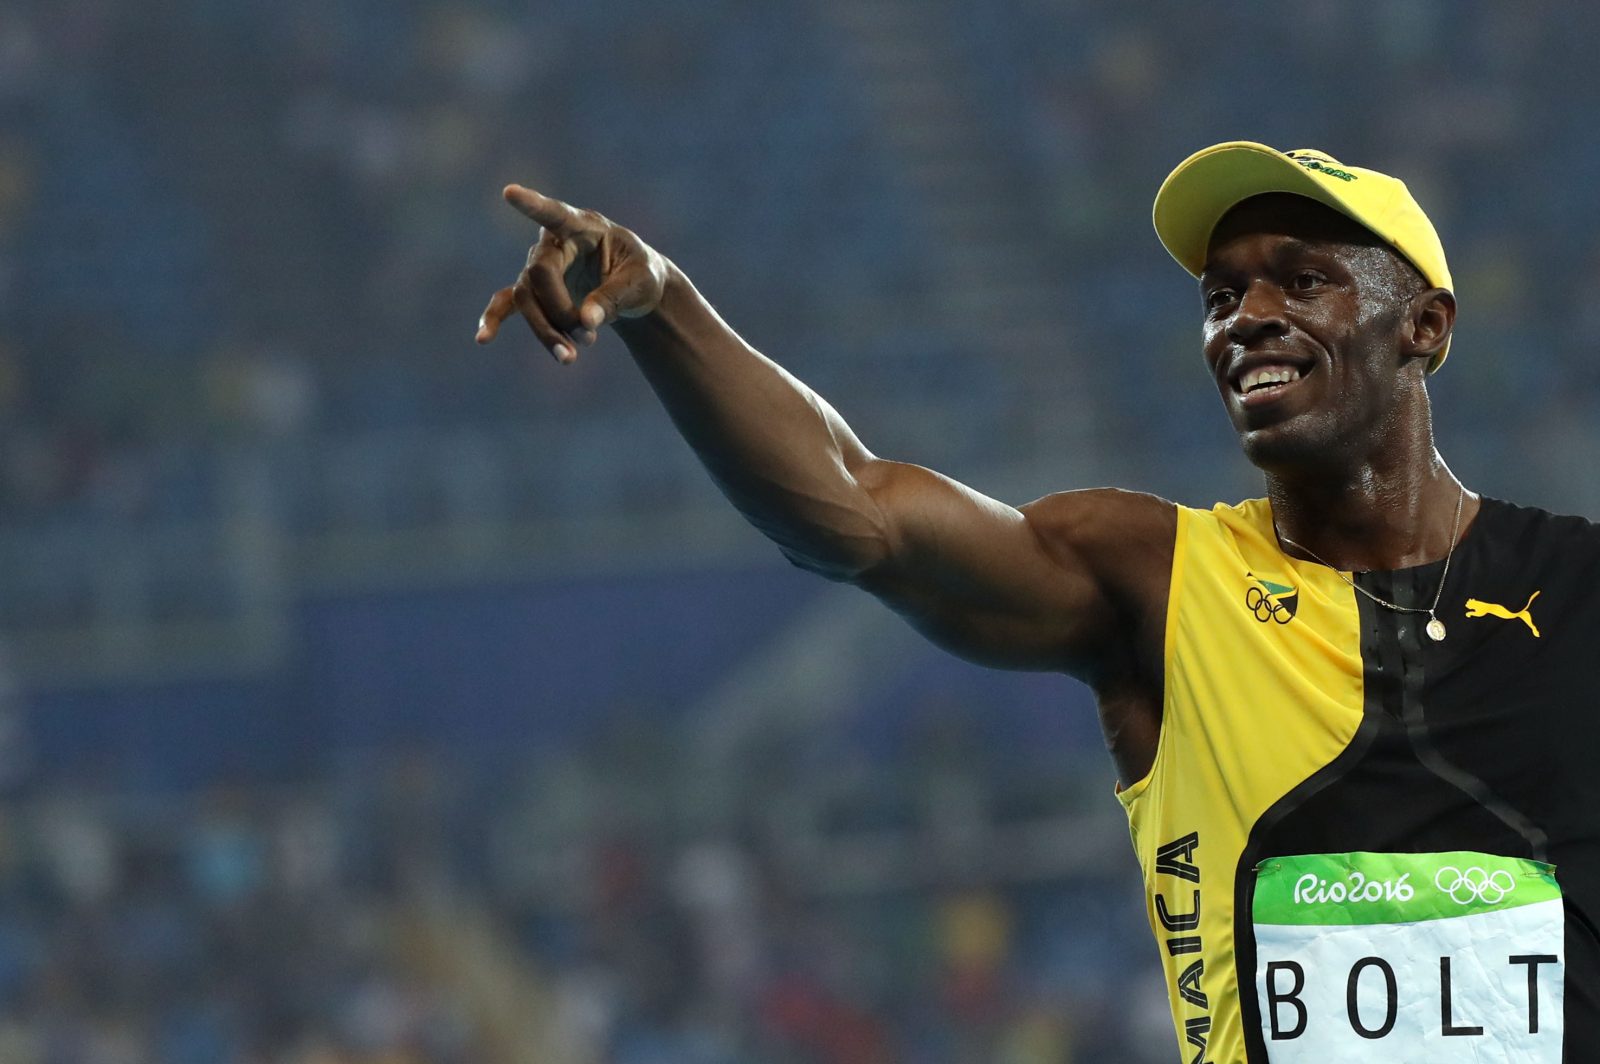 Jamajčanin Usain Bolt osvojio je zlatnu medalju na Olimpijskim igrama u Rio de Janeiru u utrci na 100 metara ( Okan Özer - Anadolu Agency )